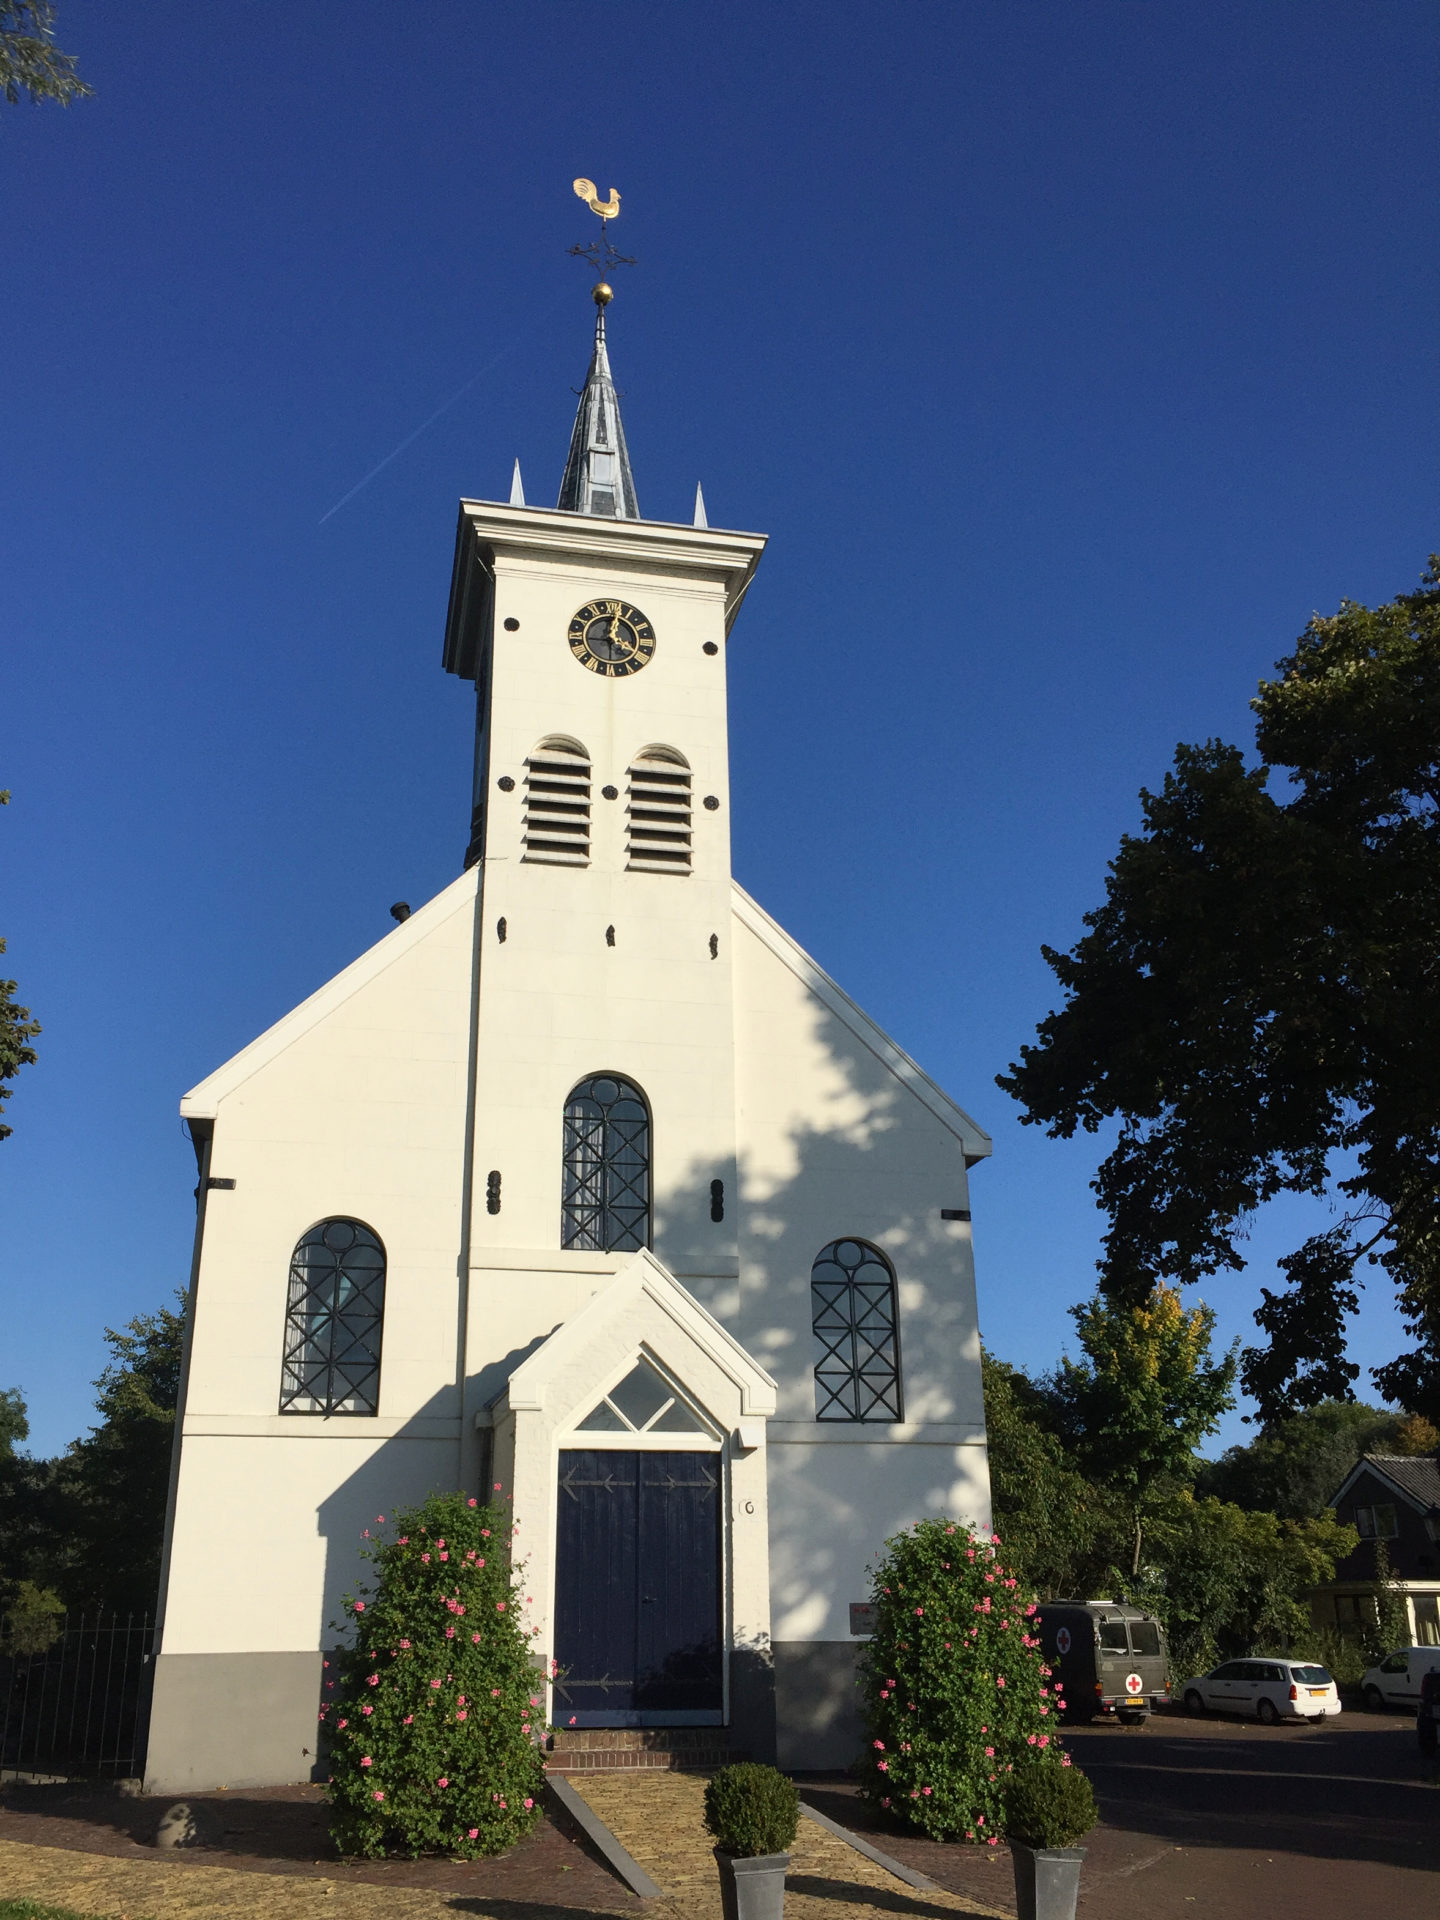 Weiße Kirche in Schellingwoude in Amsterdam Noord